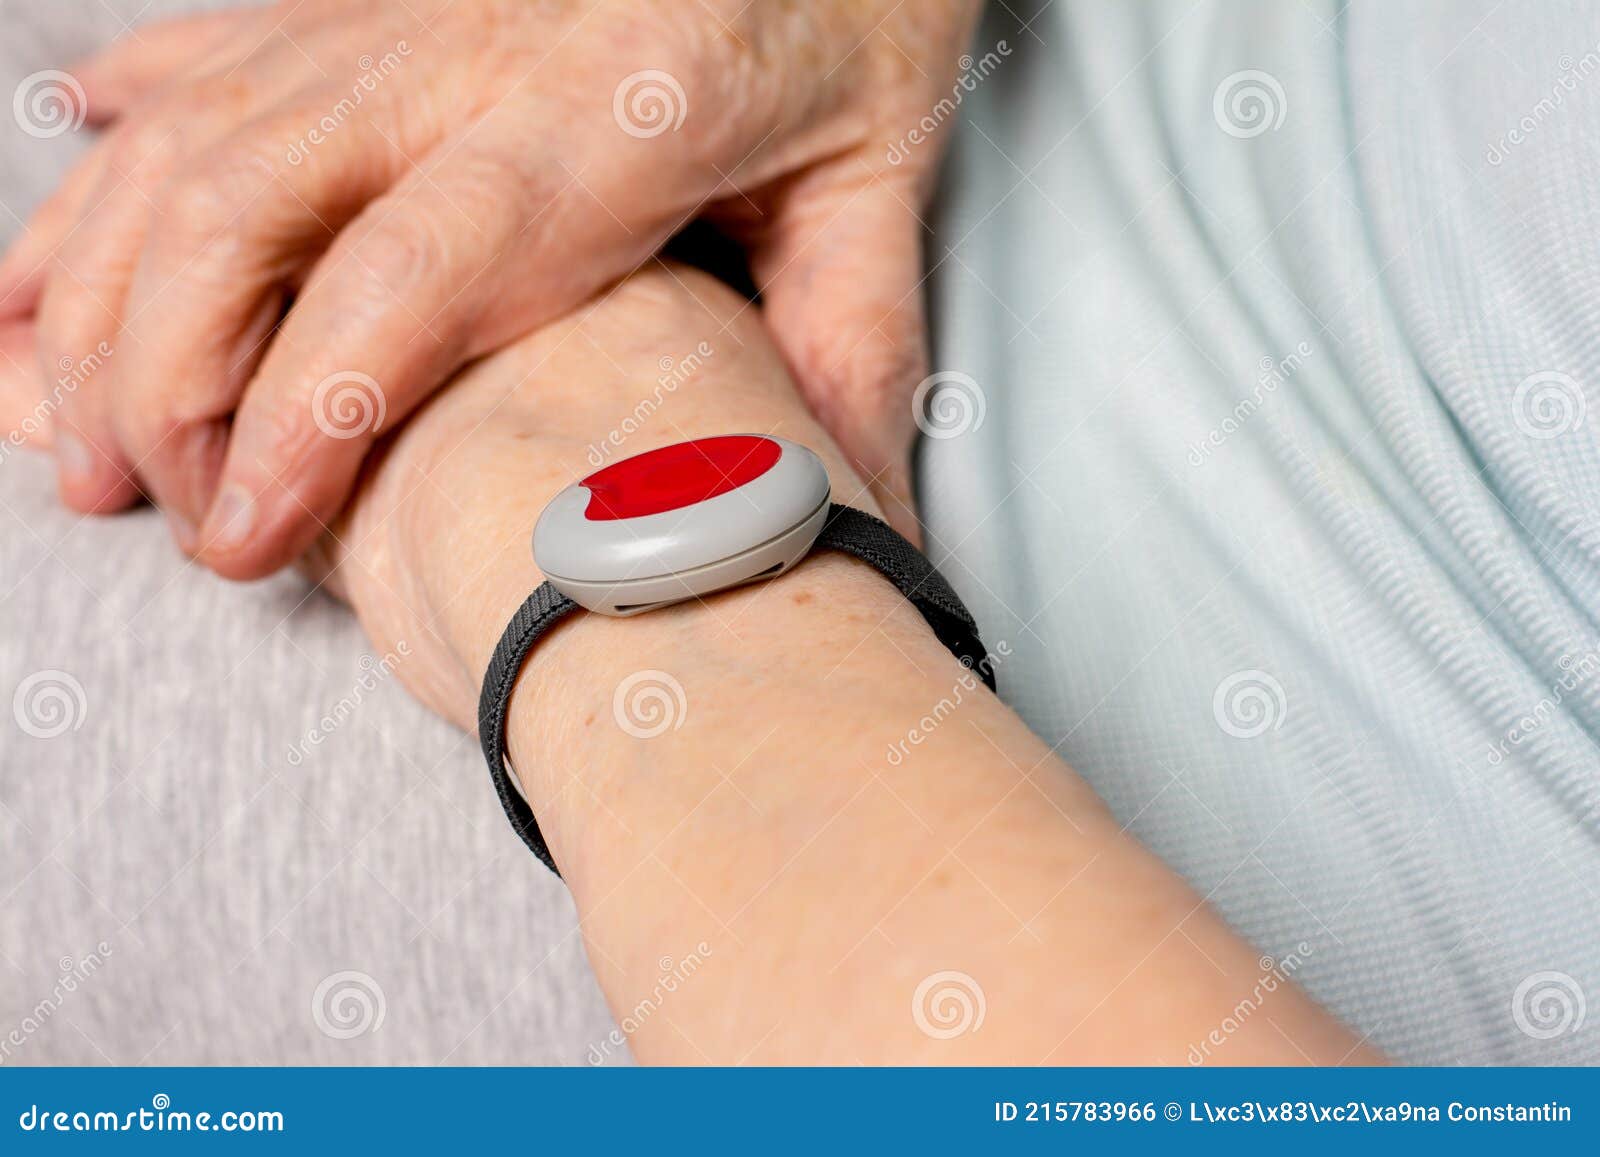 remote assistance bracelet for seniors